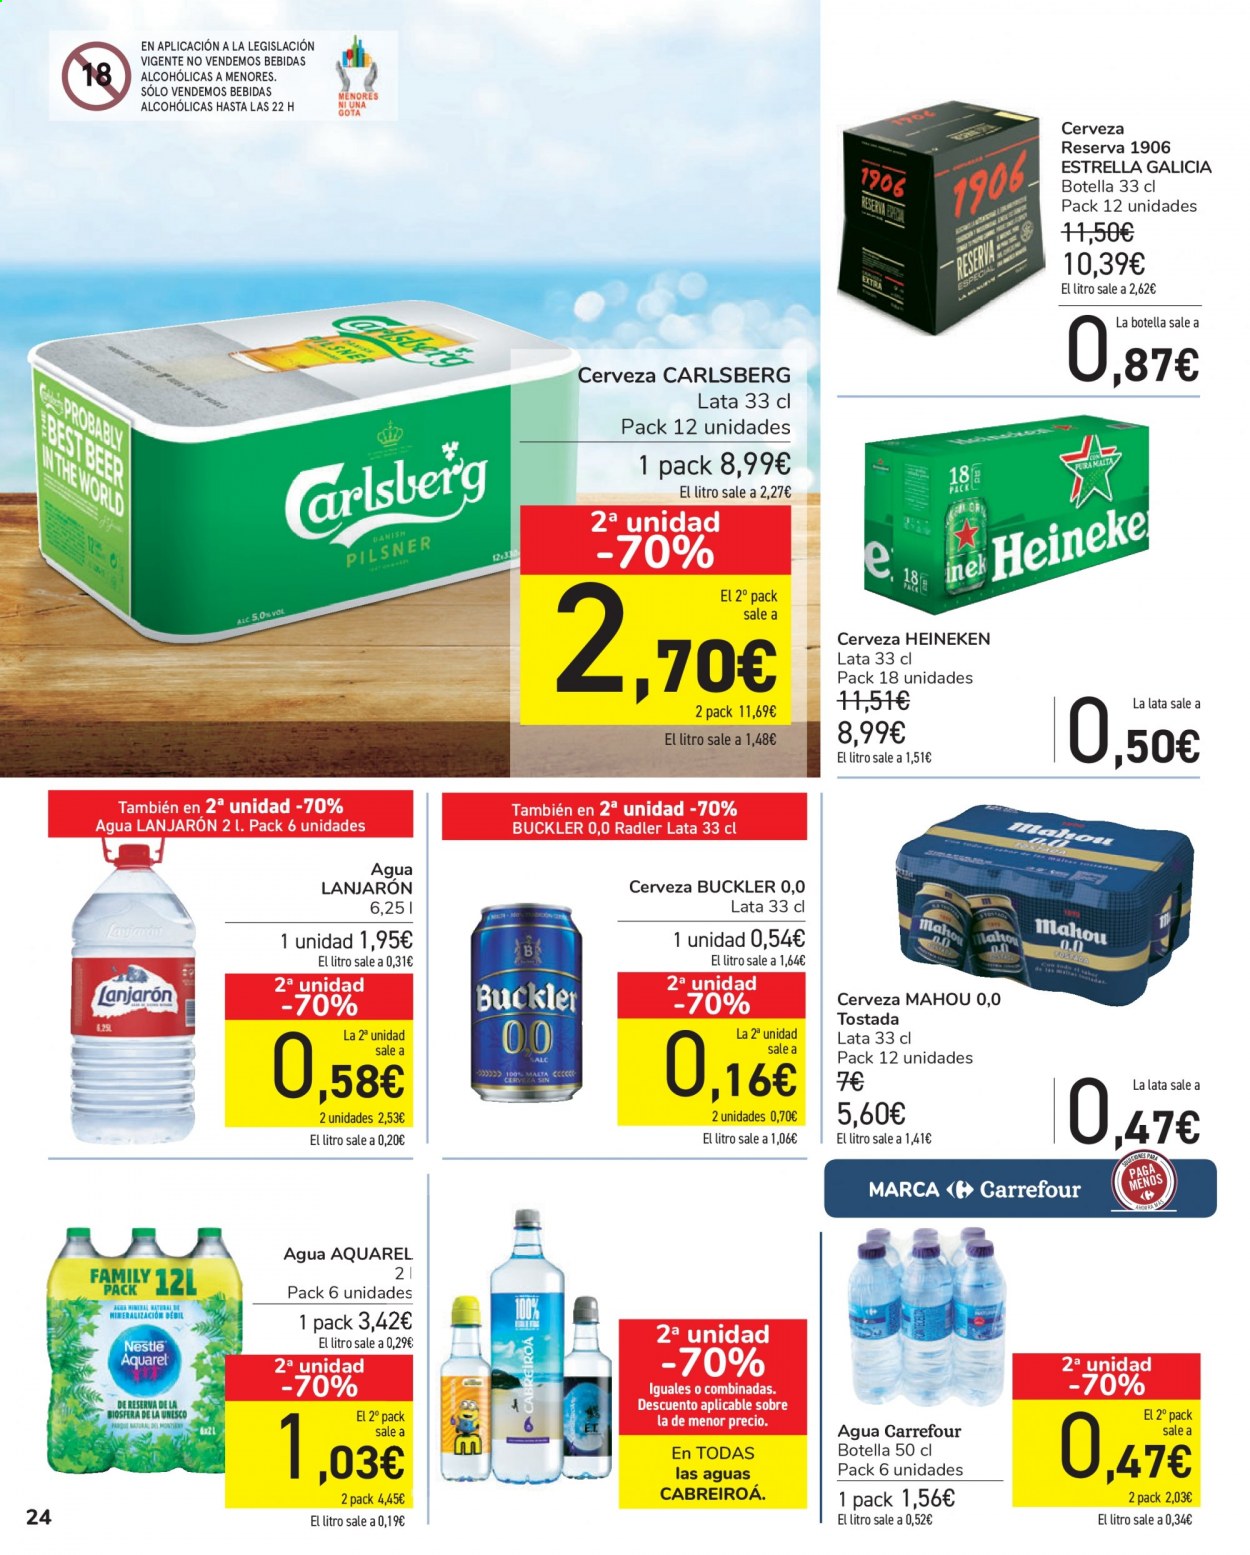 thumbnail - Folleto actual Carrefour - 16/07/21 - 28/07/21 - Ventas - Carlsberg, Estrella Galicia, Heineken, Mahou, Nestlé, bebida, agua, bebida alcohólica. Página 24.